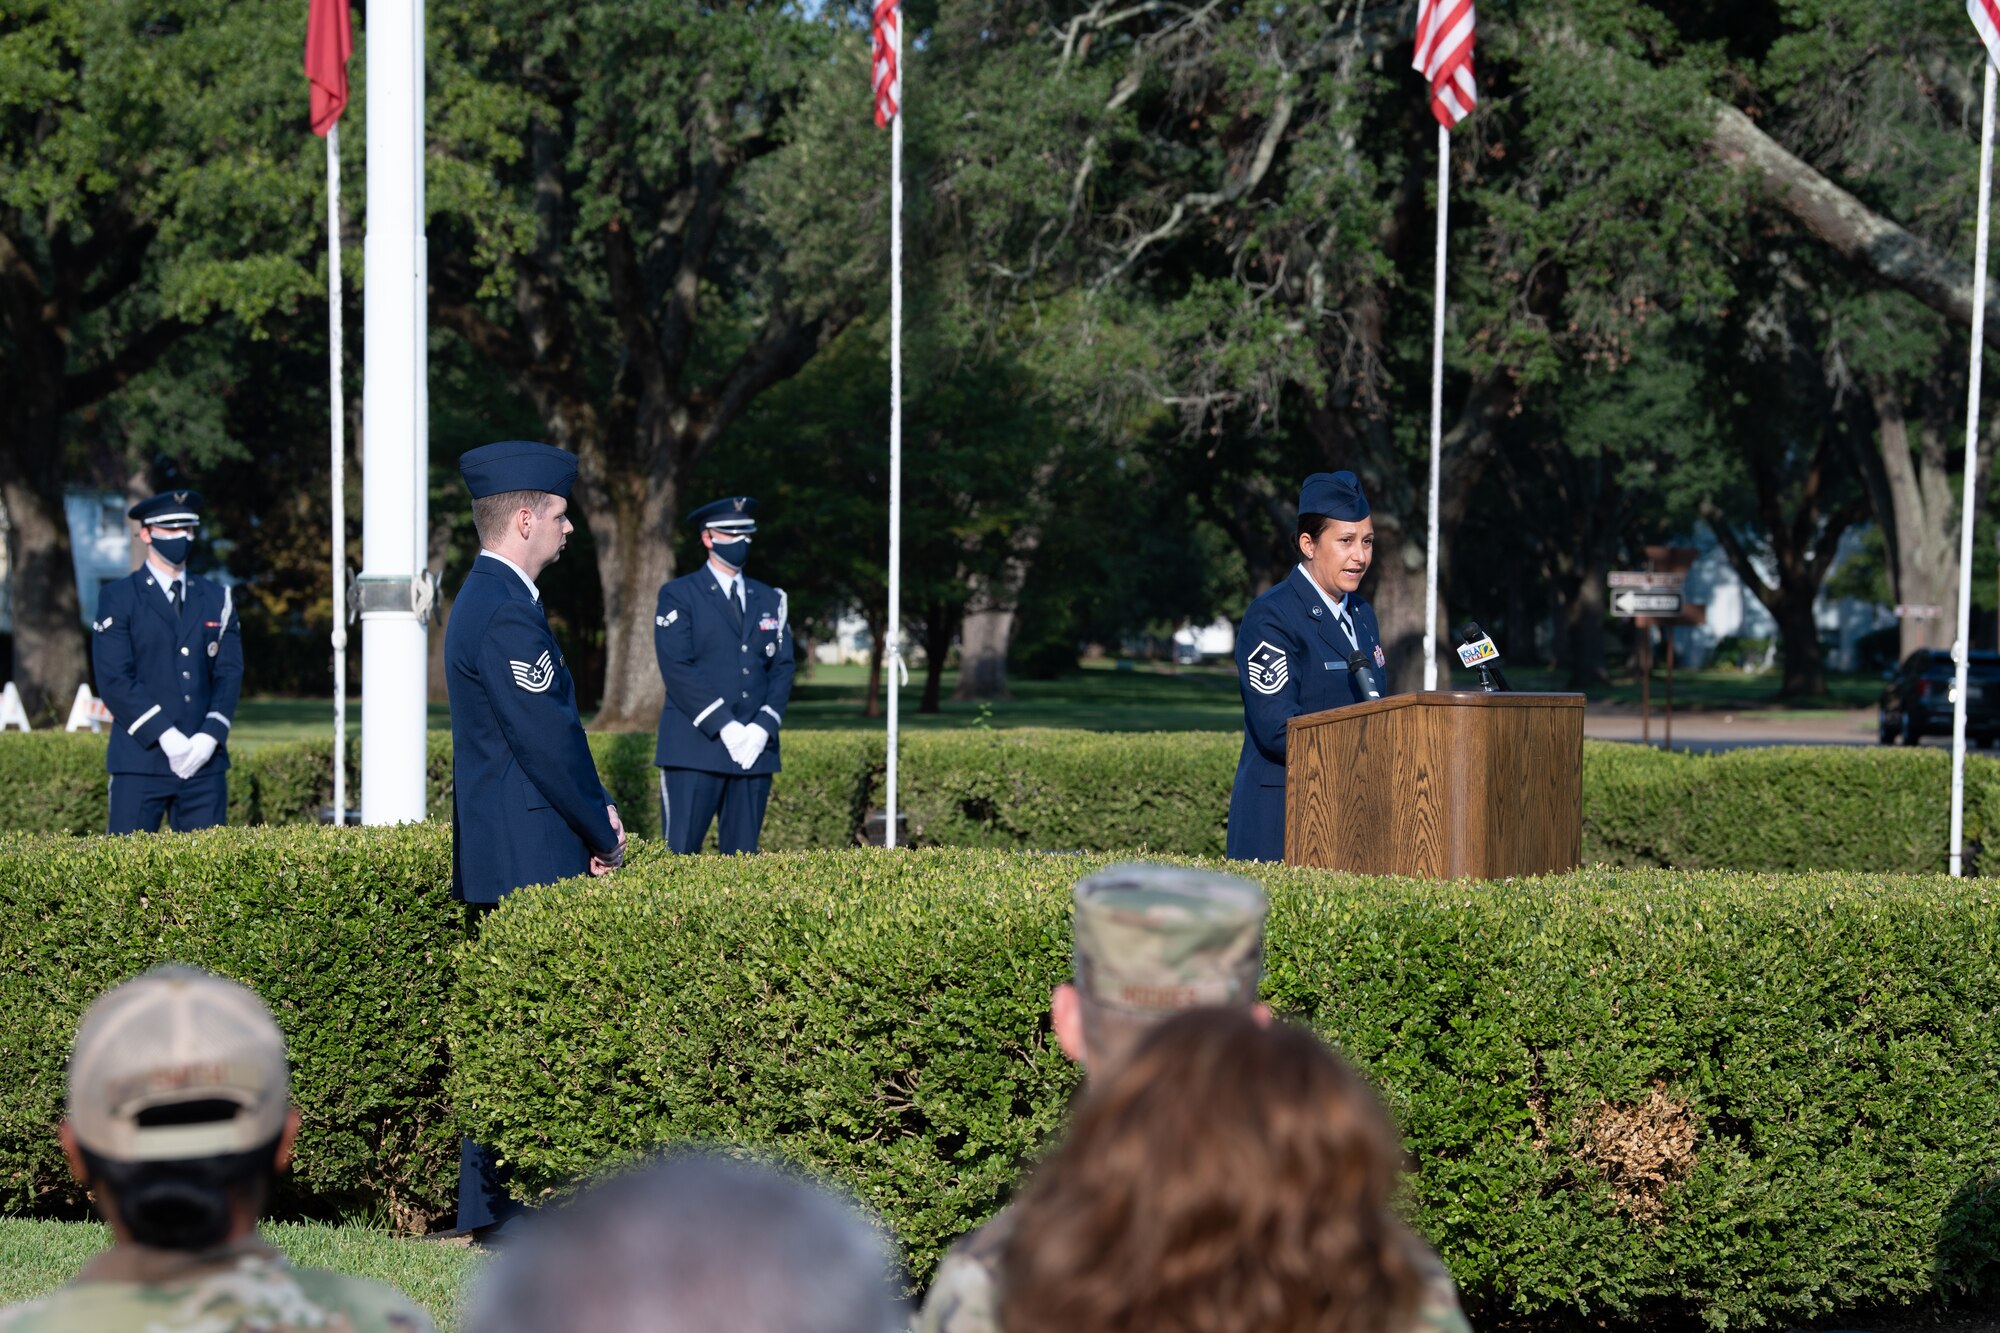 The ceremony represented the 20th anniversary of the 2001 terrorist attacks.